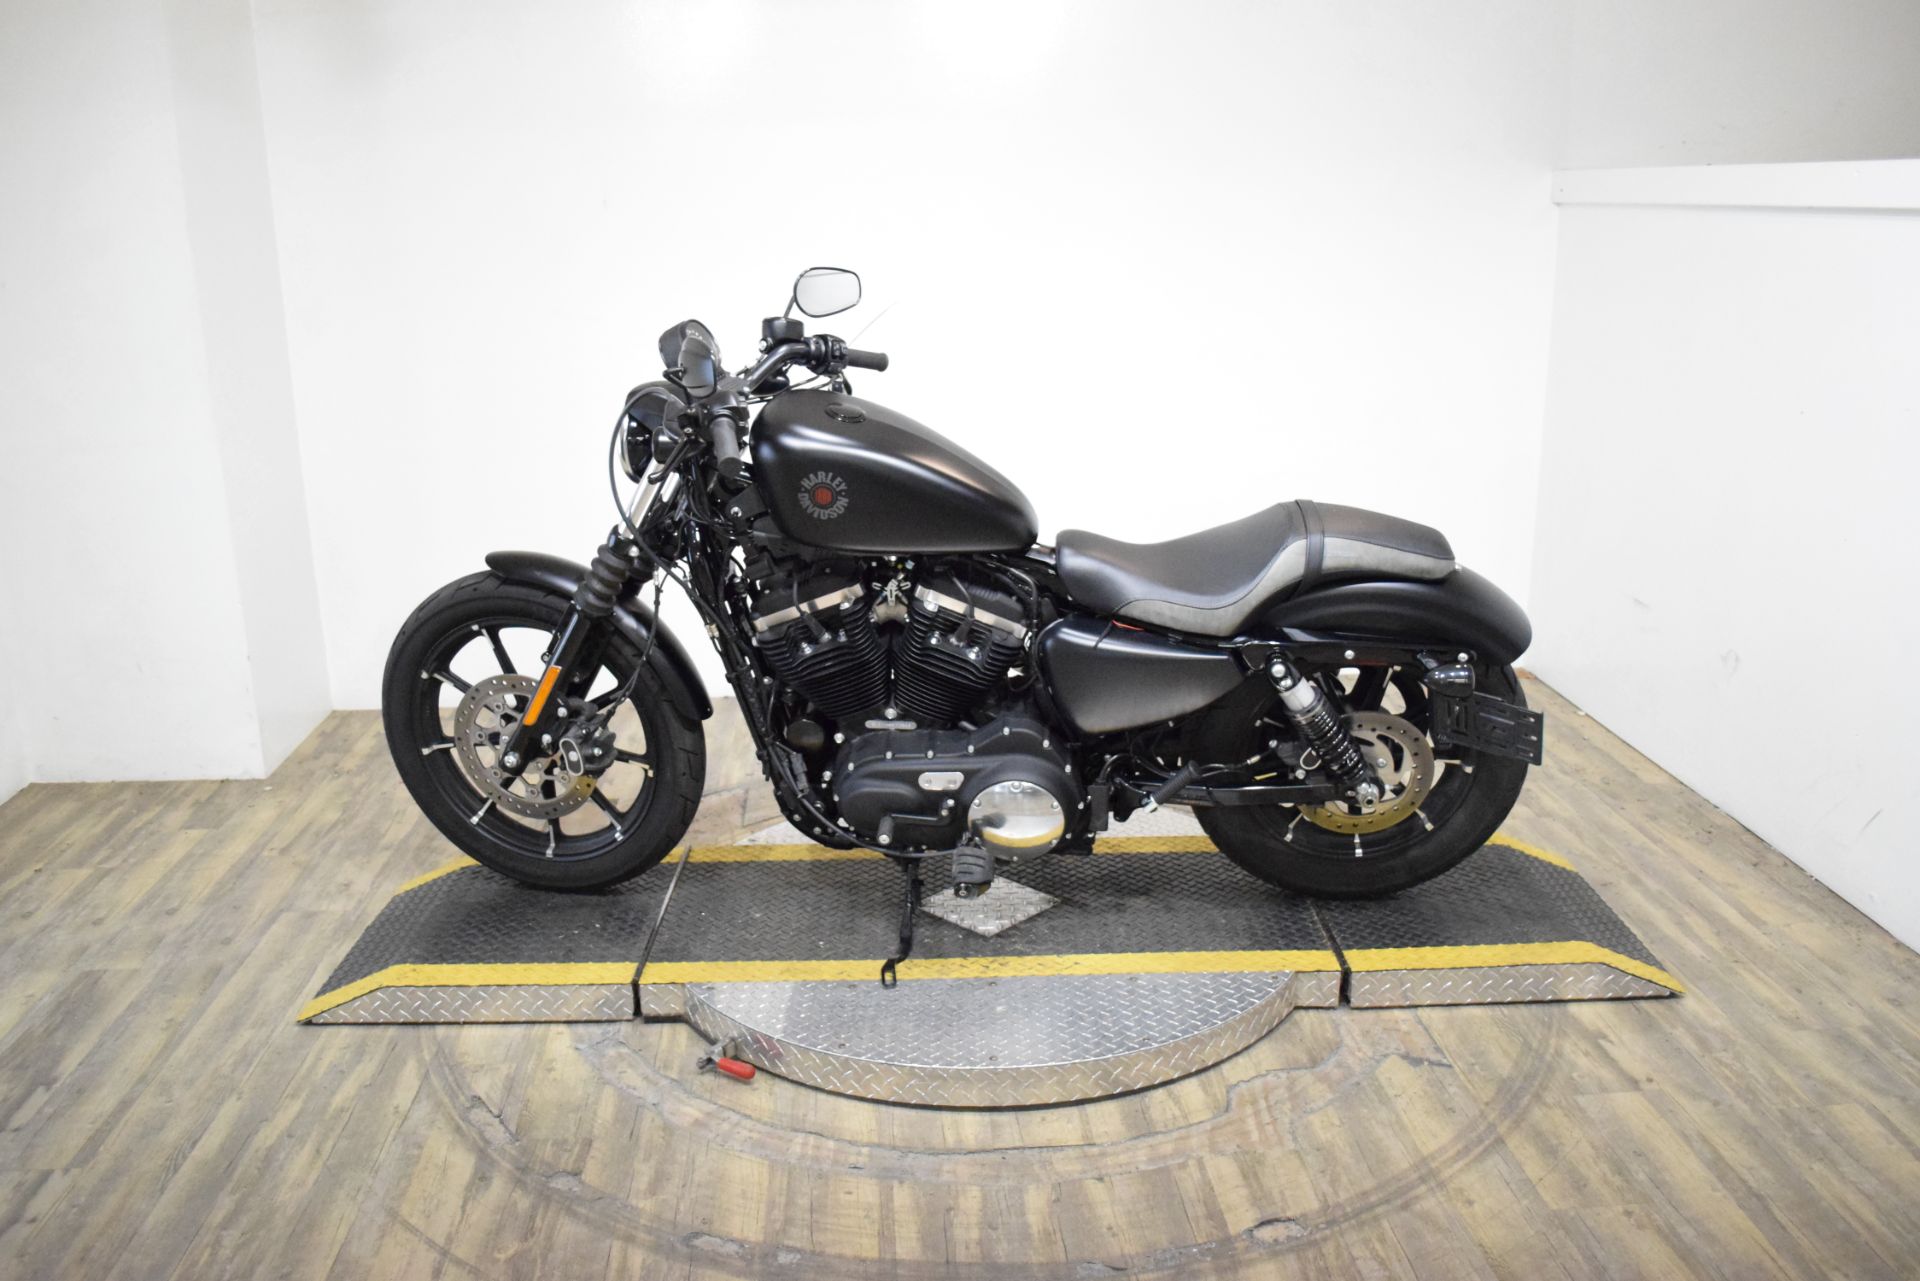 2022 Harley-Davidson Iron 883™ in Wauconda, Illinois - Photo 15